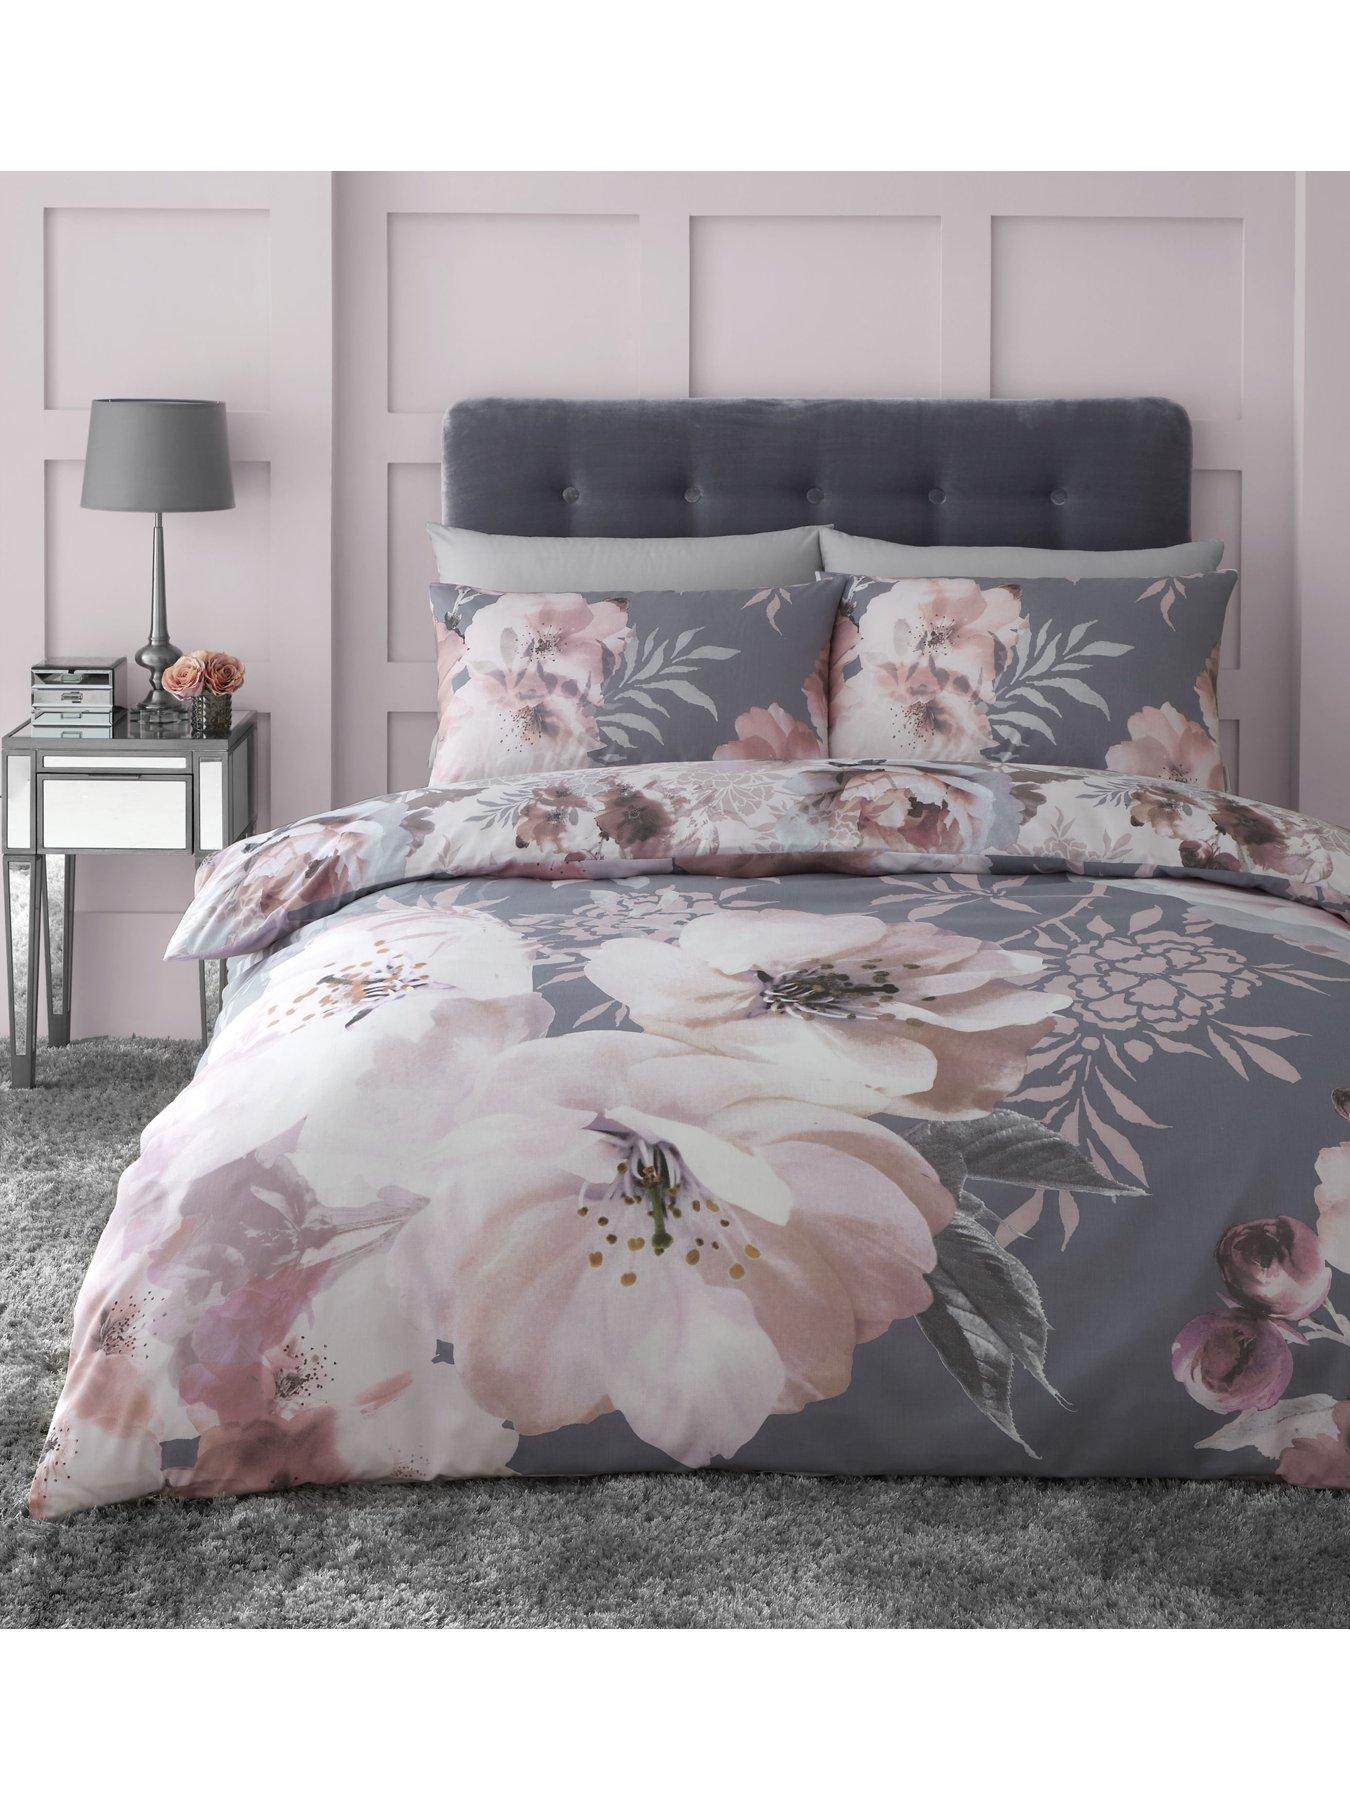 Claret Catherine Lansfield Dramatic Floral Duvet Cover Bedding Set